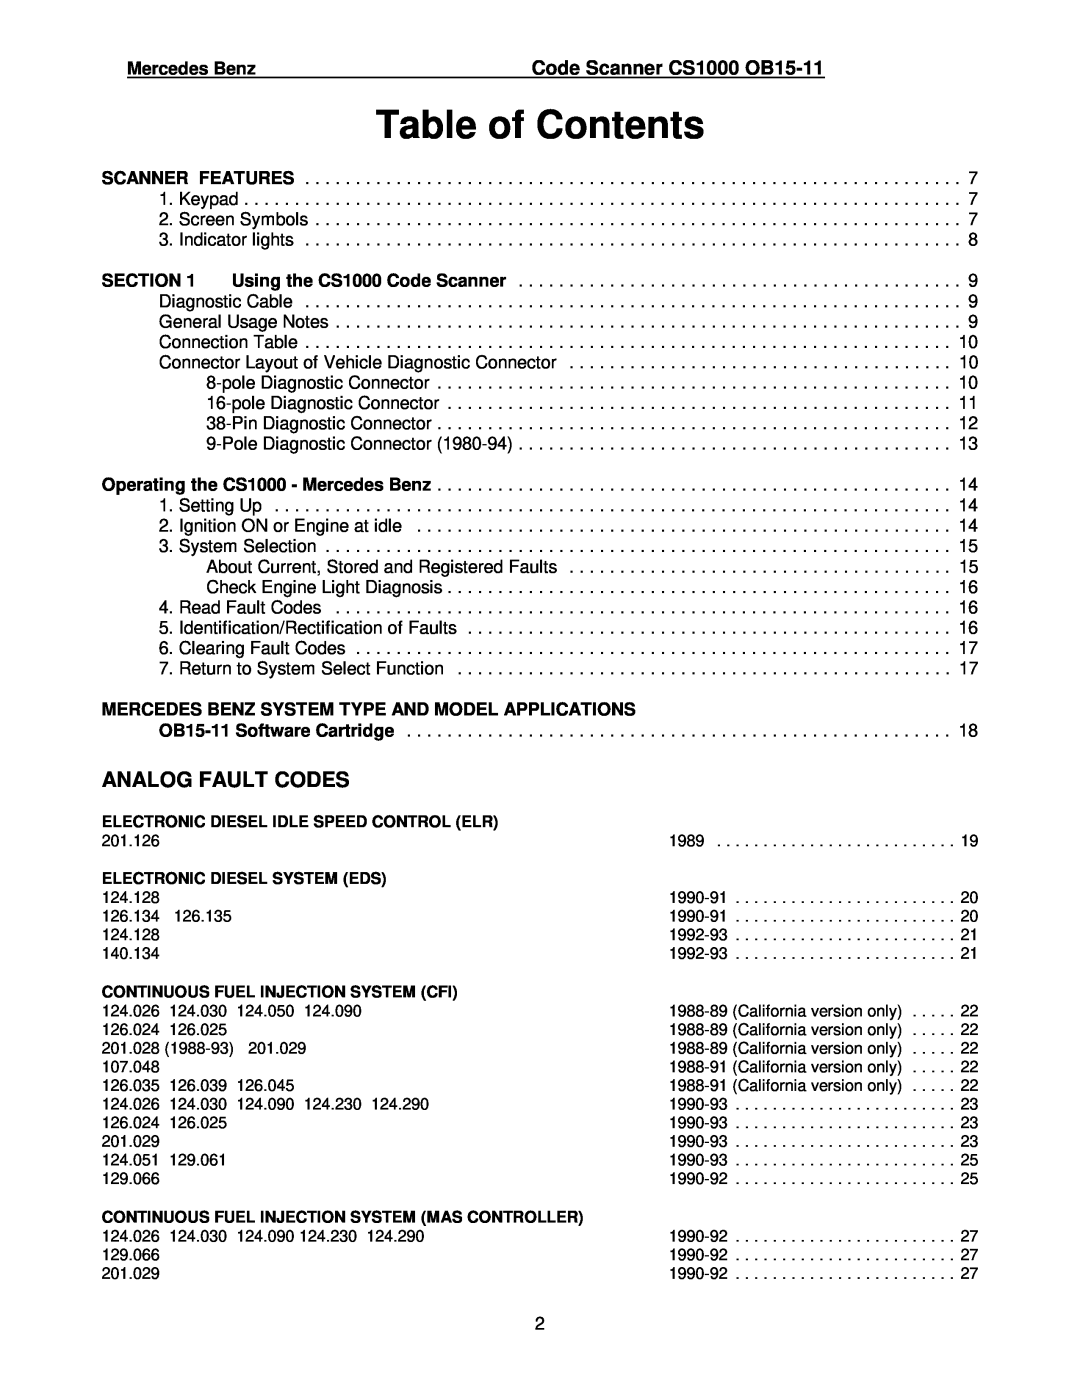 Mercedes-Benz manual Table of Contents, Analog Fault Codes, Code Scanner CS1000 OB15-11, Mercedes Benz 